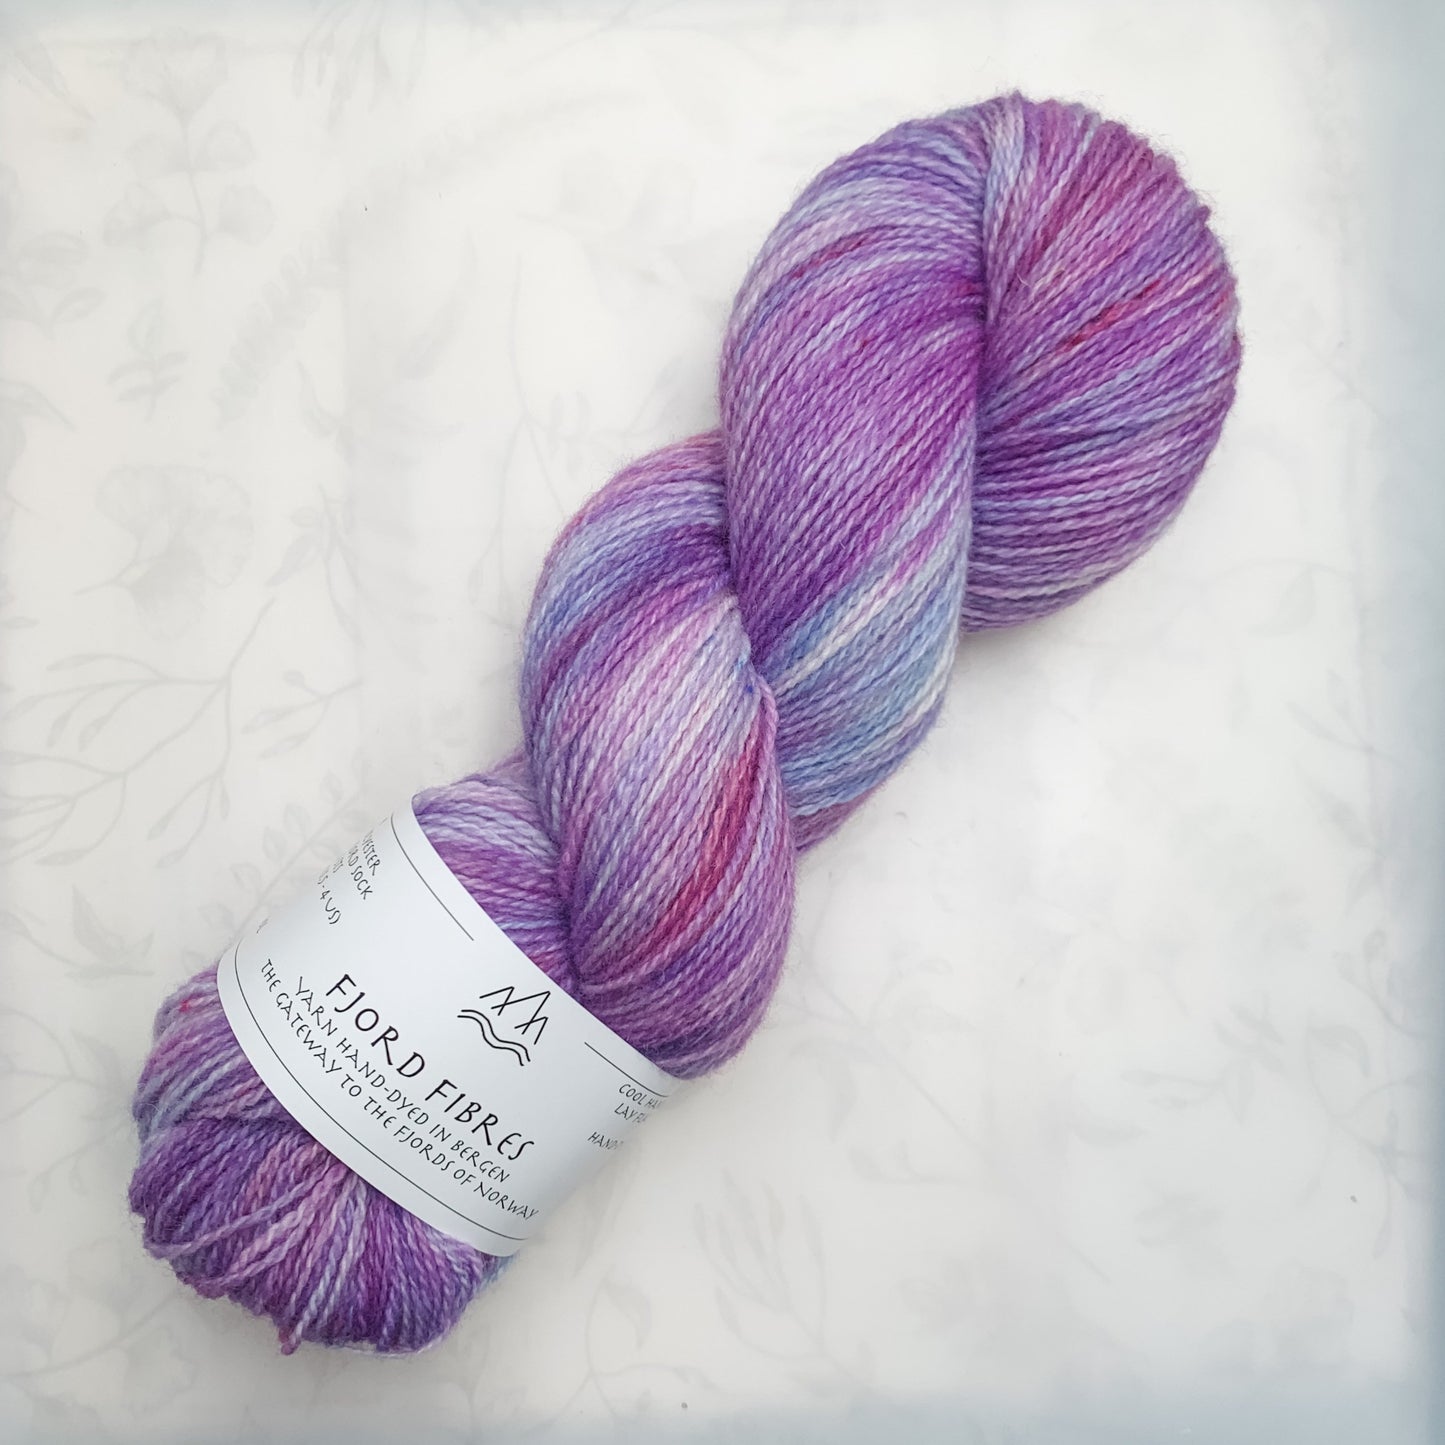 Lilac fields - Trollfjord sock - Variegated Yarn - Hand dyed yarn